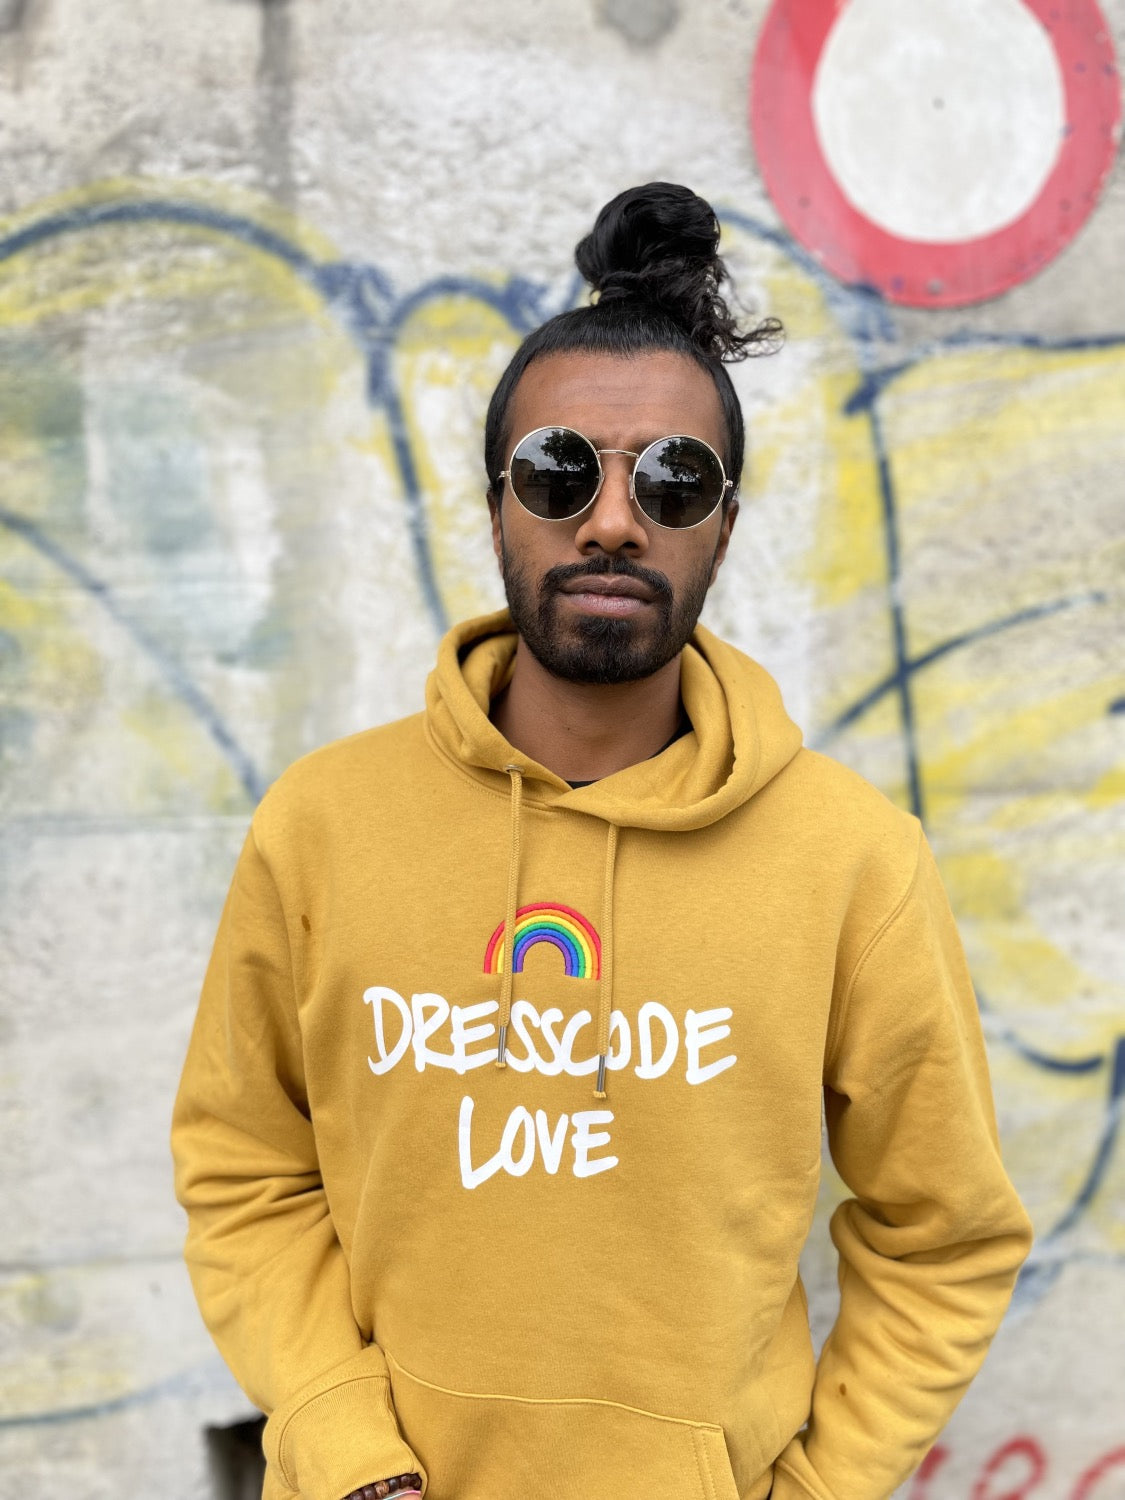 Dresscode Love - Unisex Hoodie